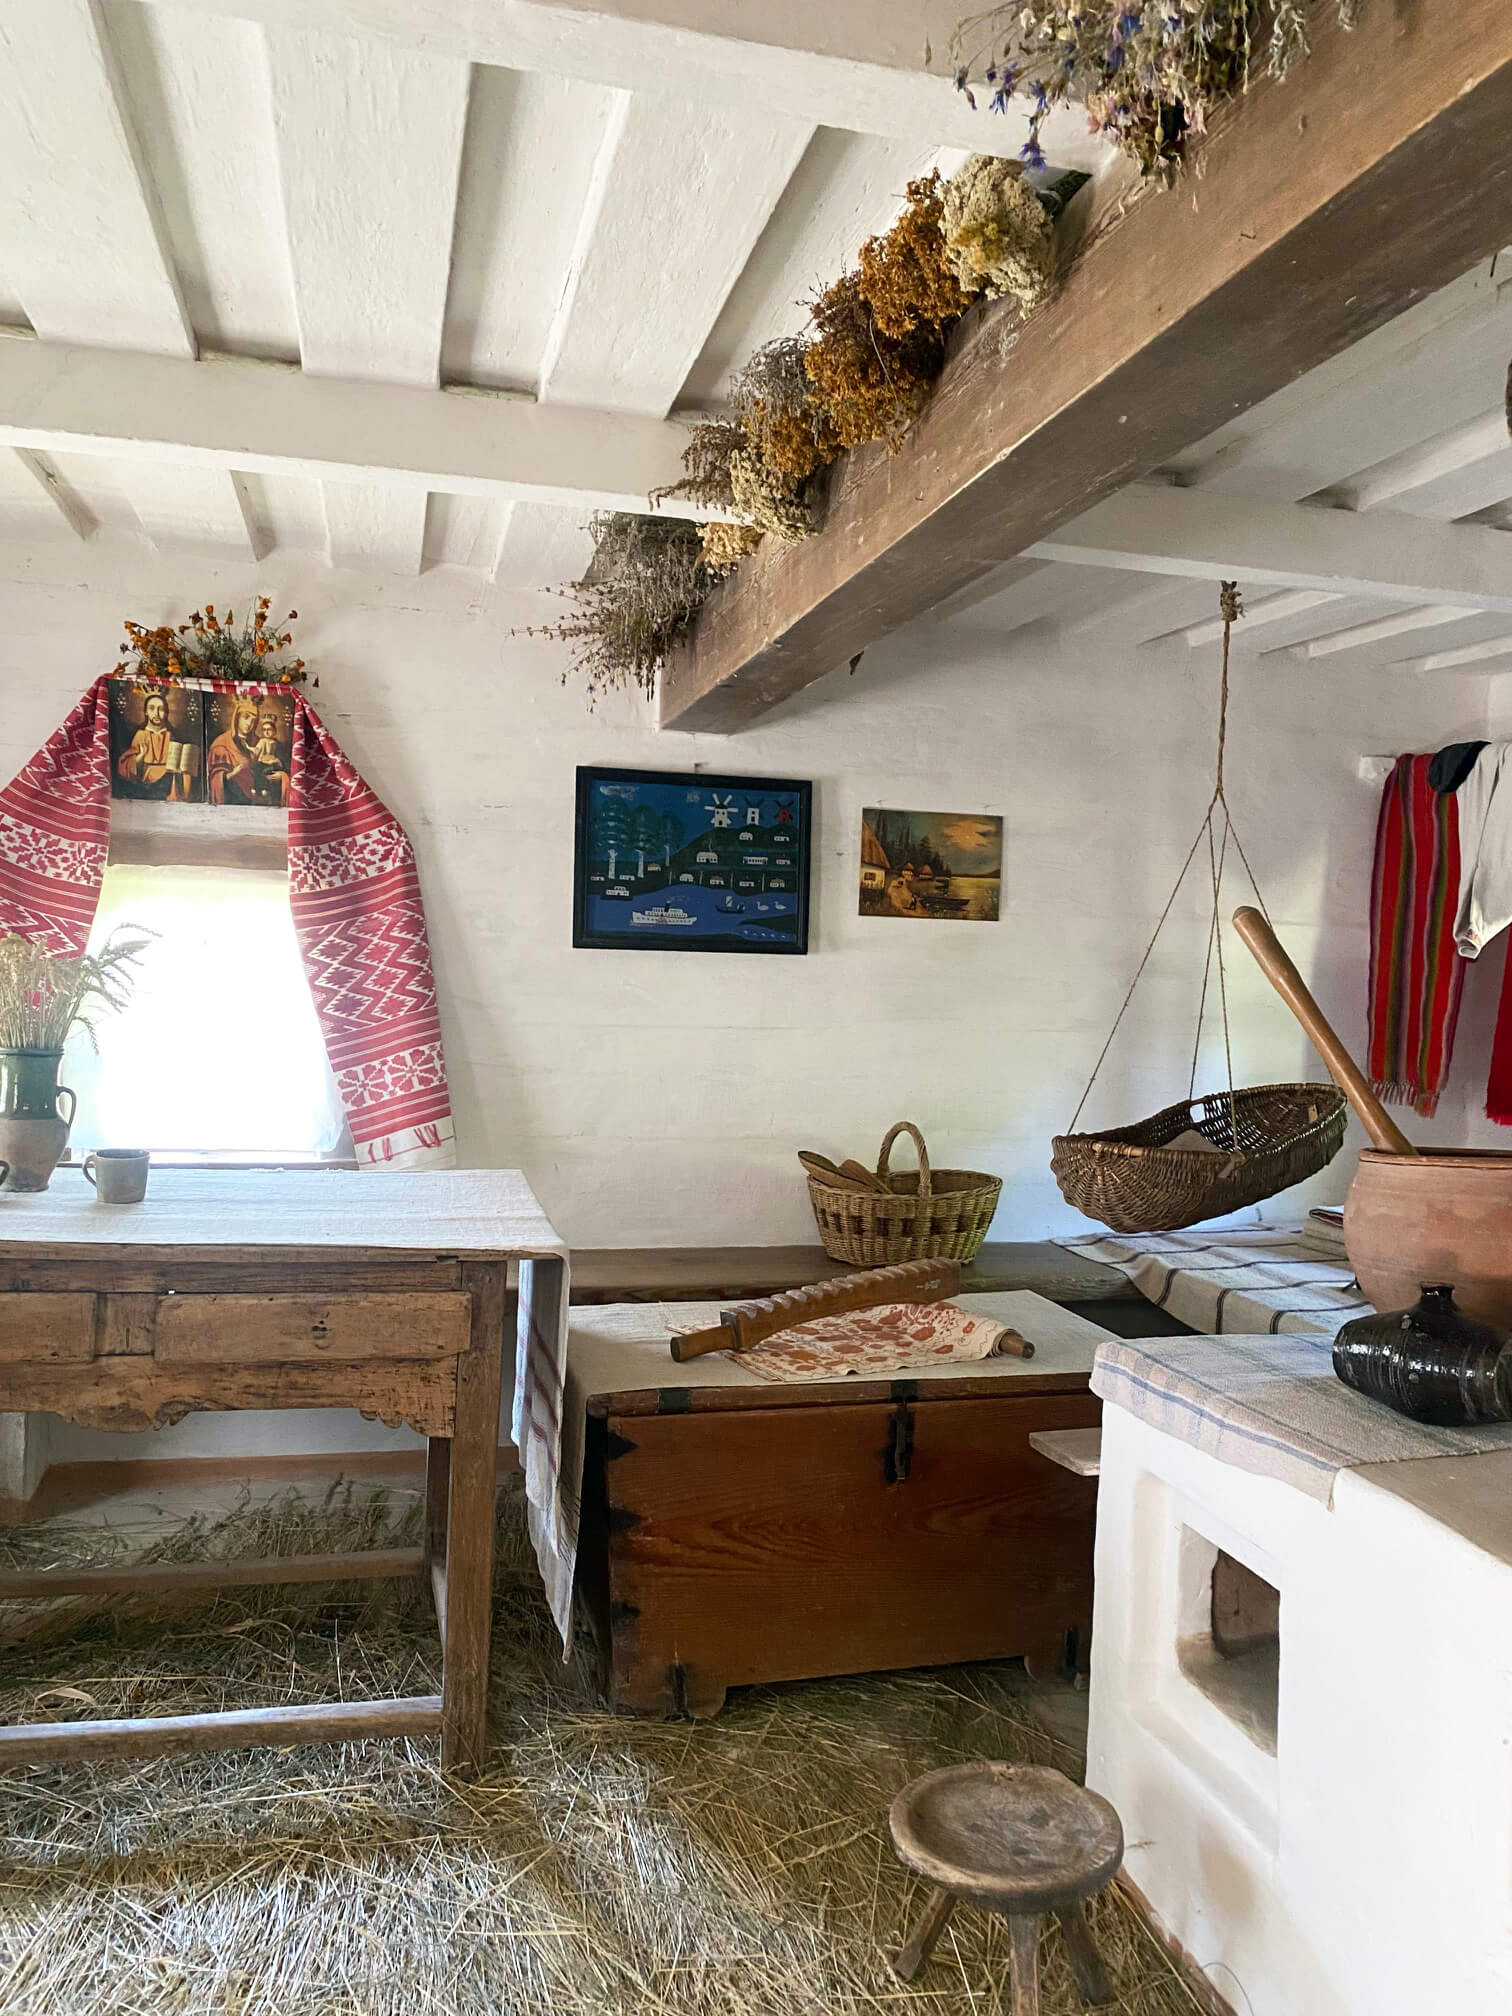 The interior of an 18th-century-style Ukrainian village home.